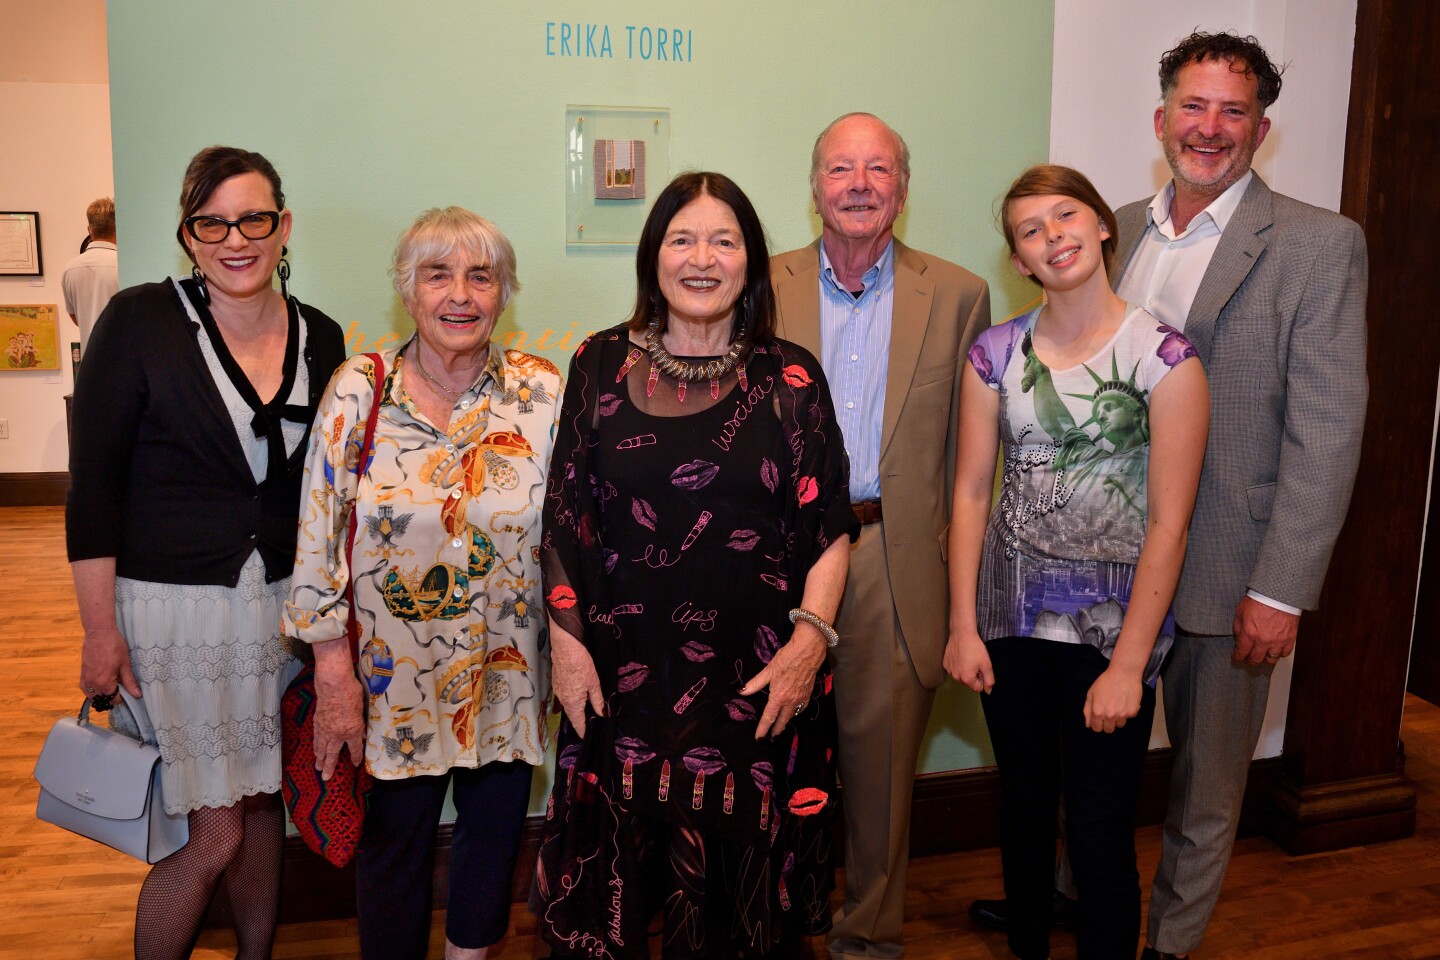 Athenaeum Executive Director Erika Torri (center) with Tina Torri, Jacqui McNally, Fred Torri and Else and Kevin Ranker